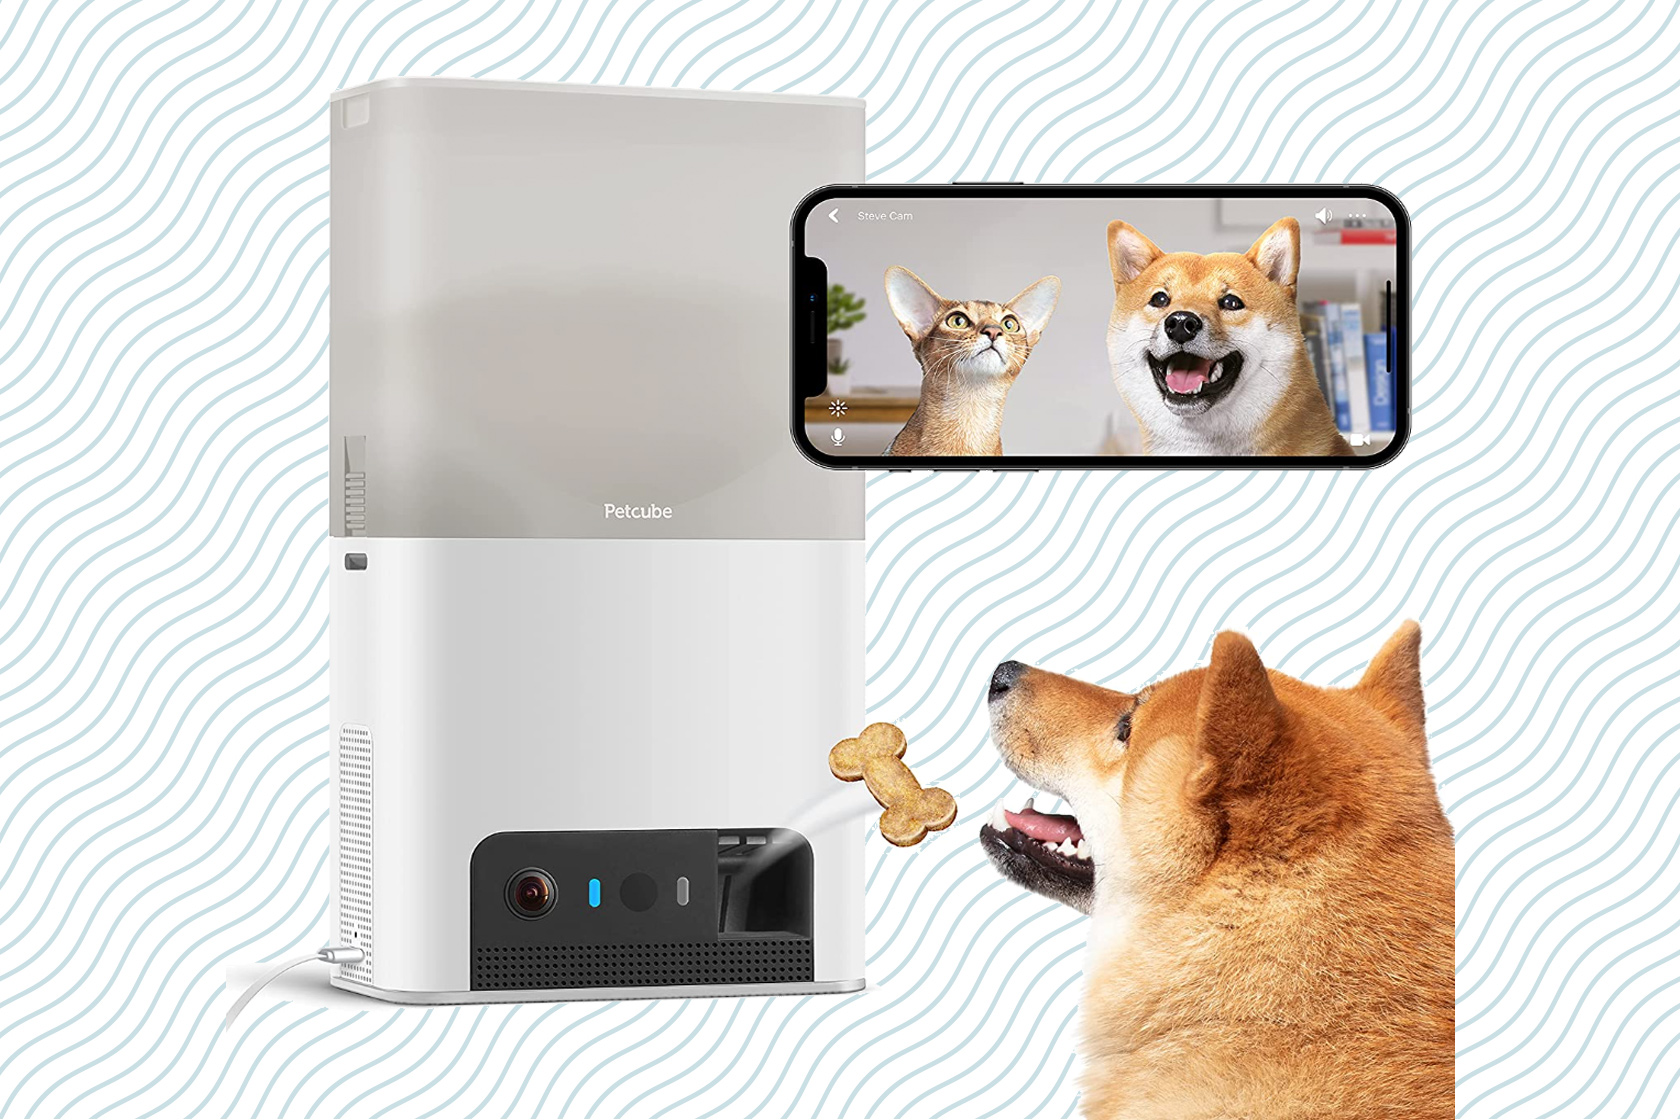 I got the Wopet Smart Pet Camera & Treat Dispenser - Here's My Review